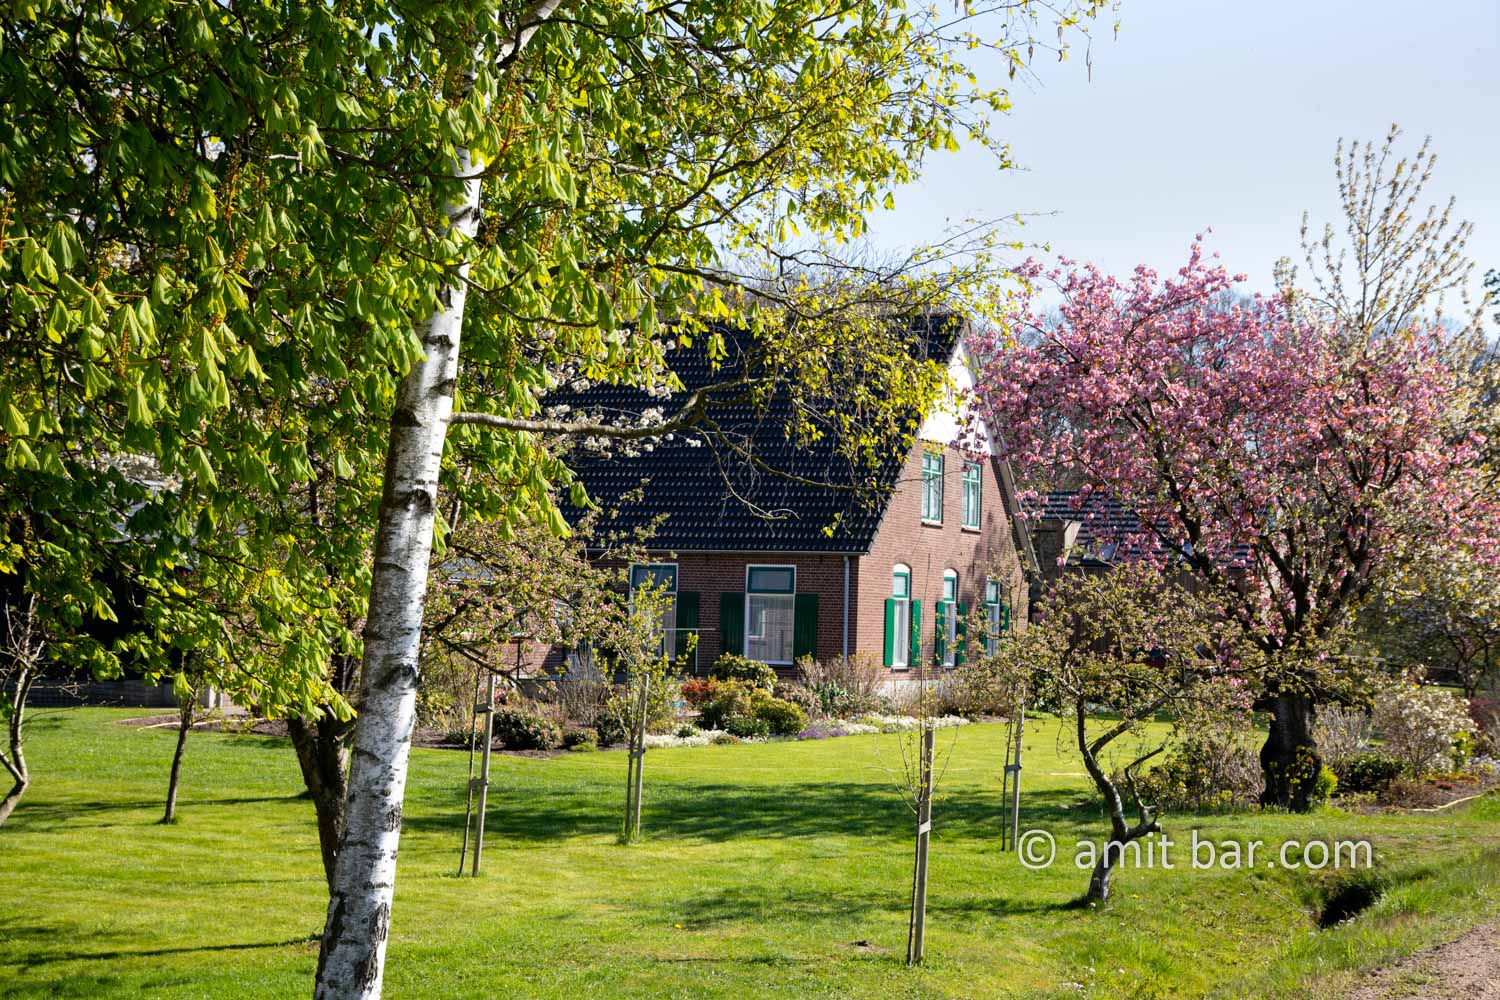 Landscape Spring 2021 III: Spring time in the Achterhoek, The Netherlands